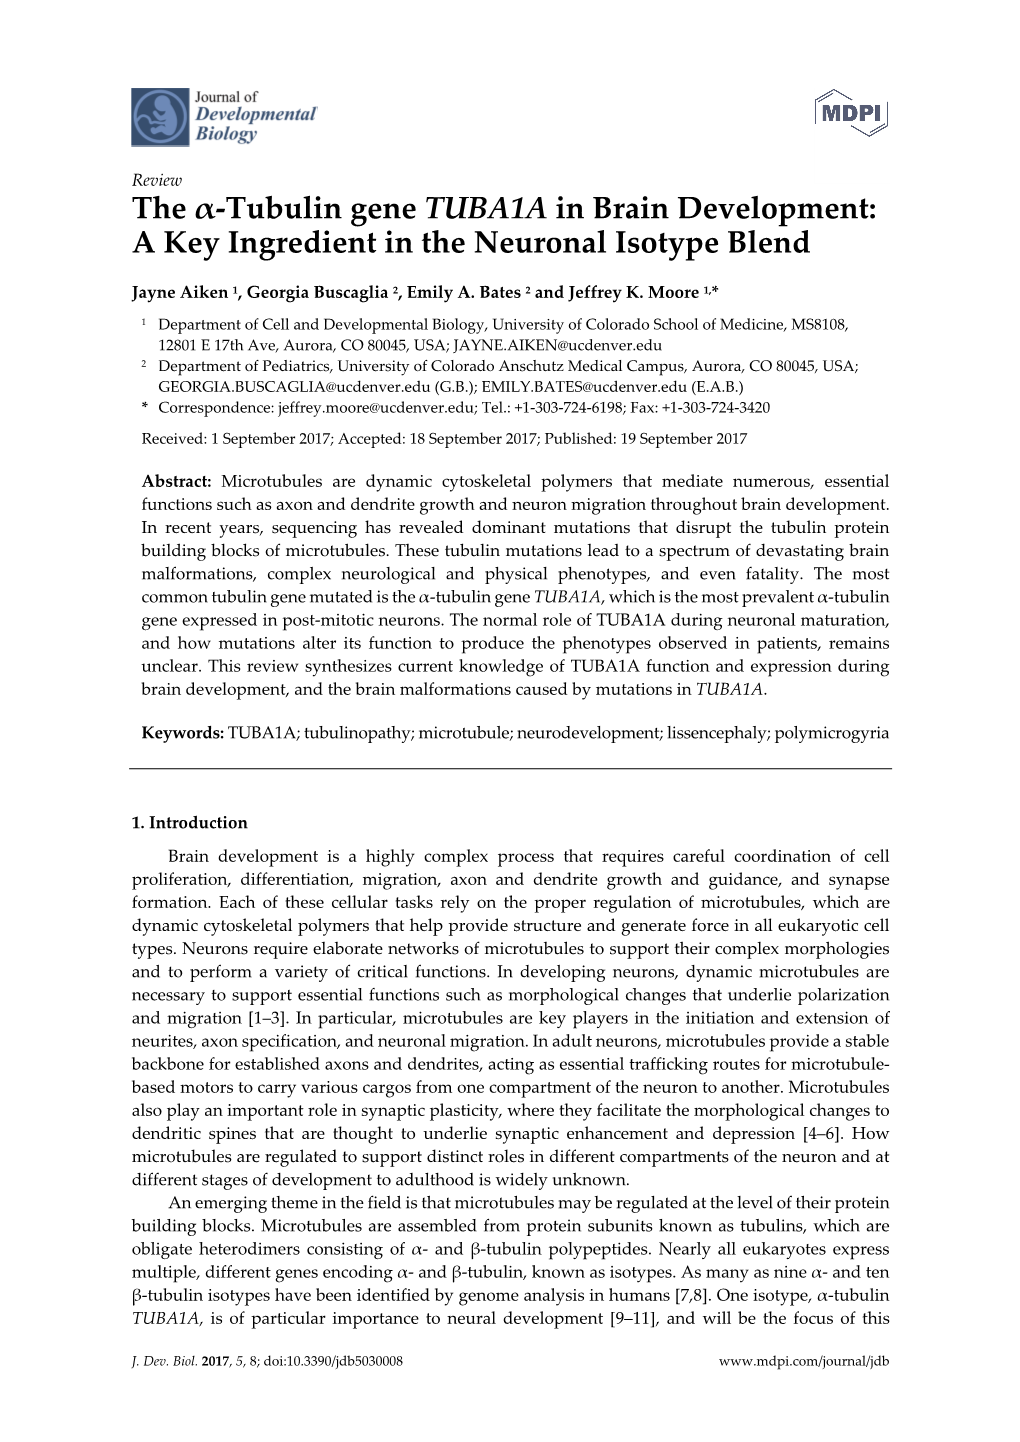 The Α-Tubulin Gene TUBA1A in Brain Development: a Key Ingredient in the Neuronal Isotype Blend